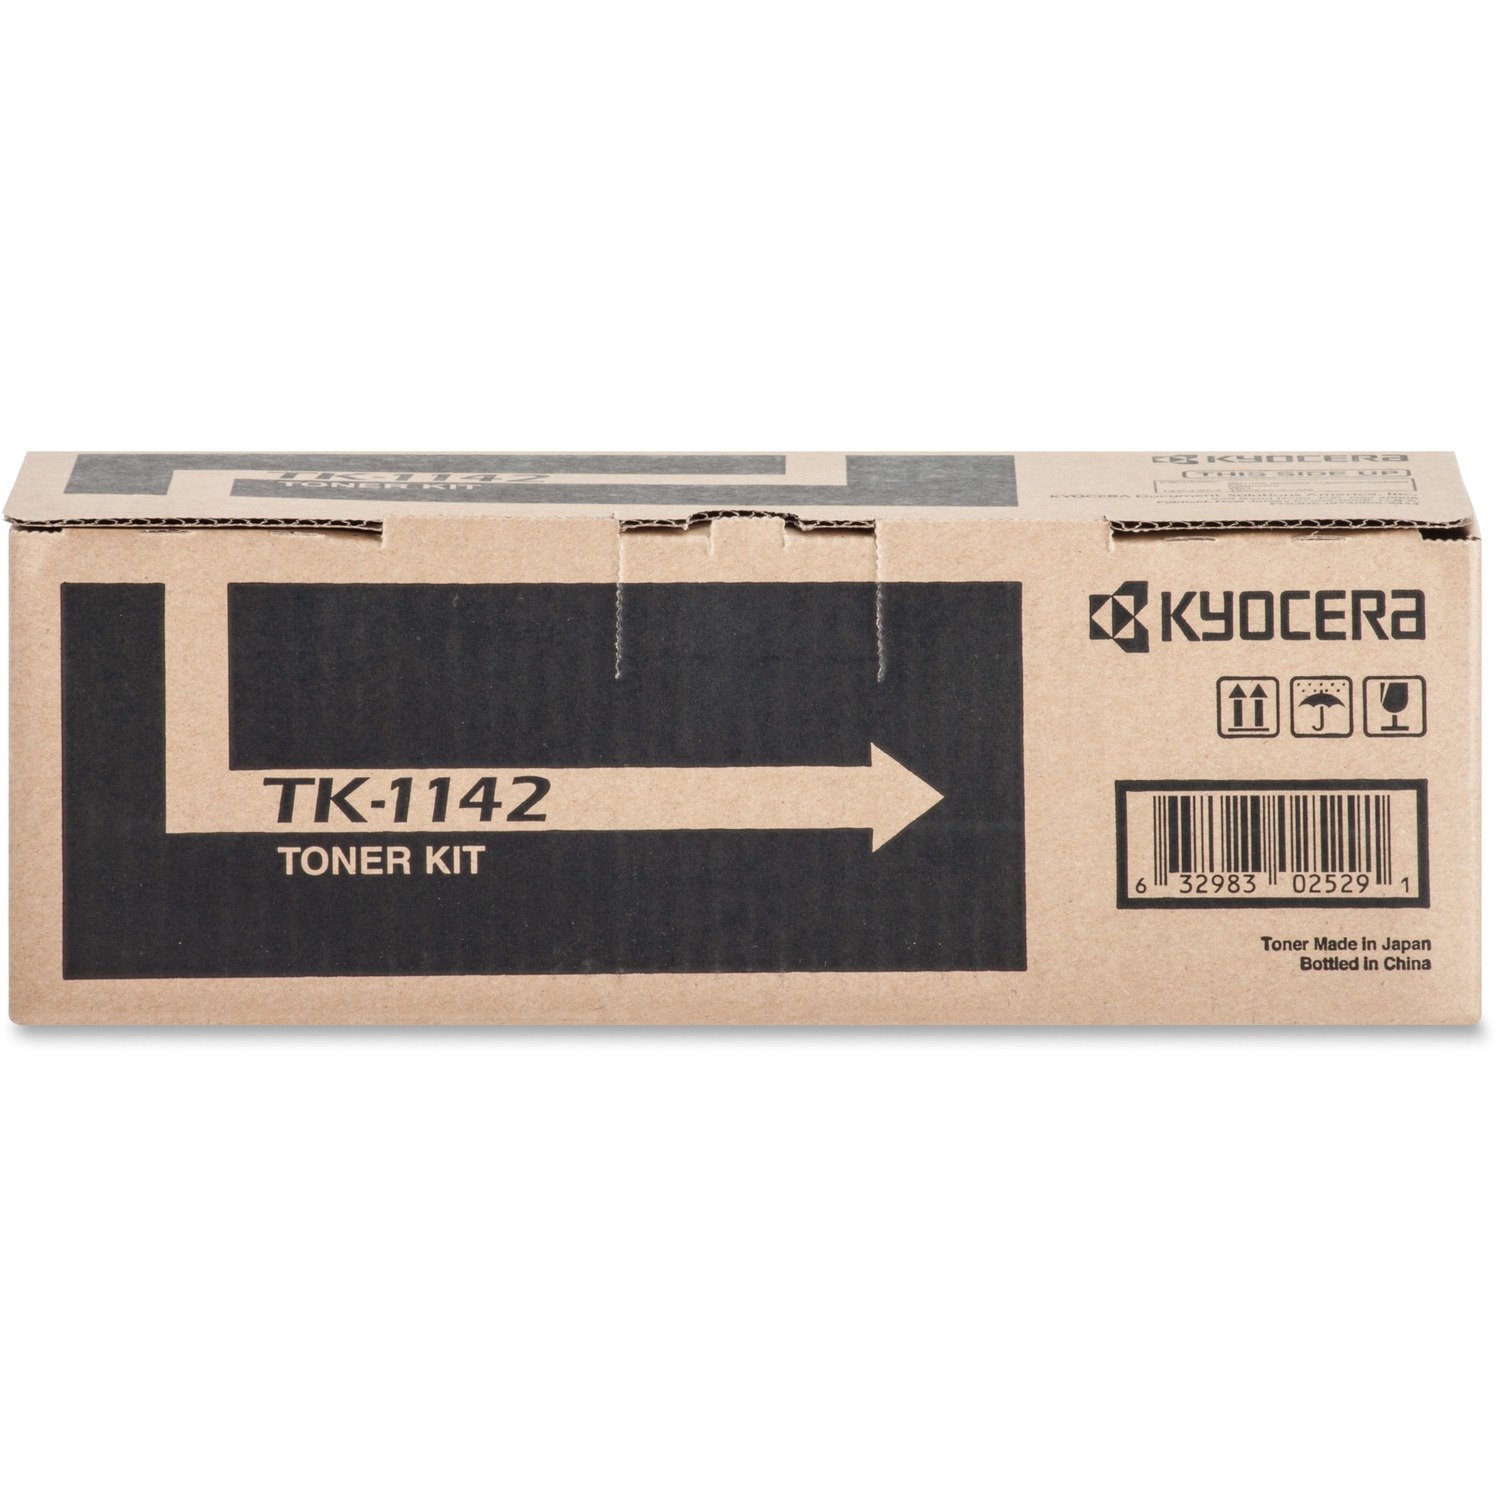 Kyocera TK-1142 Original Toner Cartridge